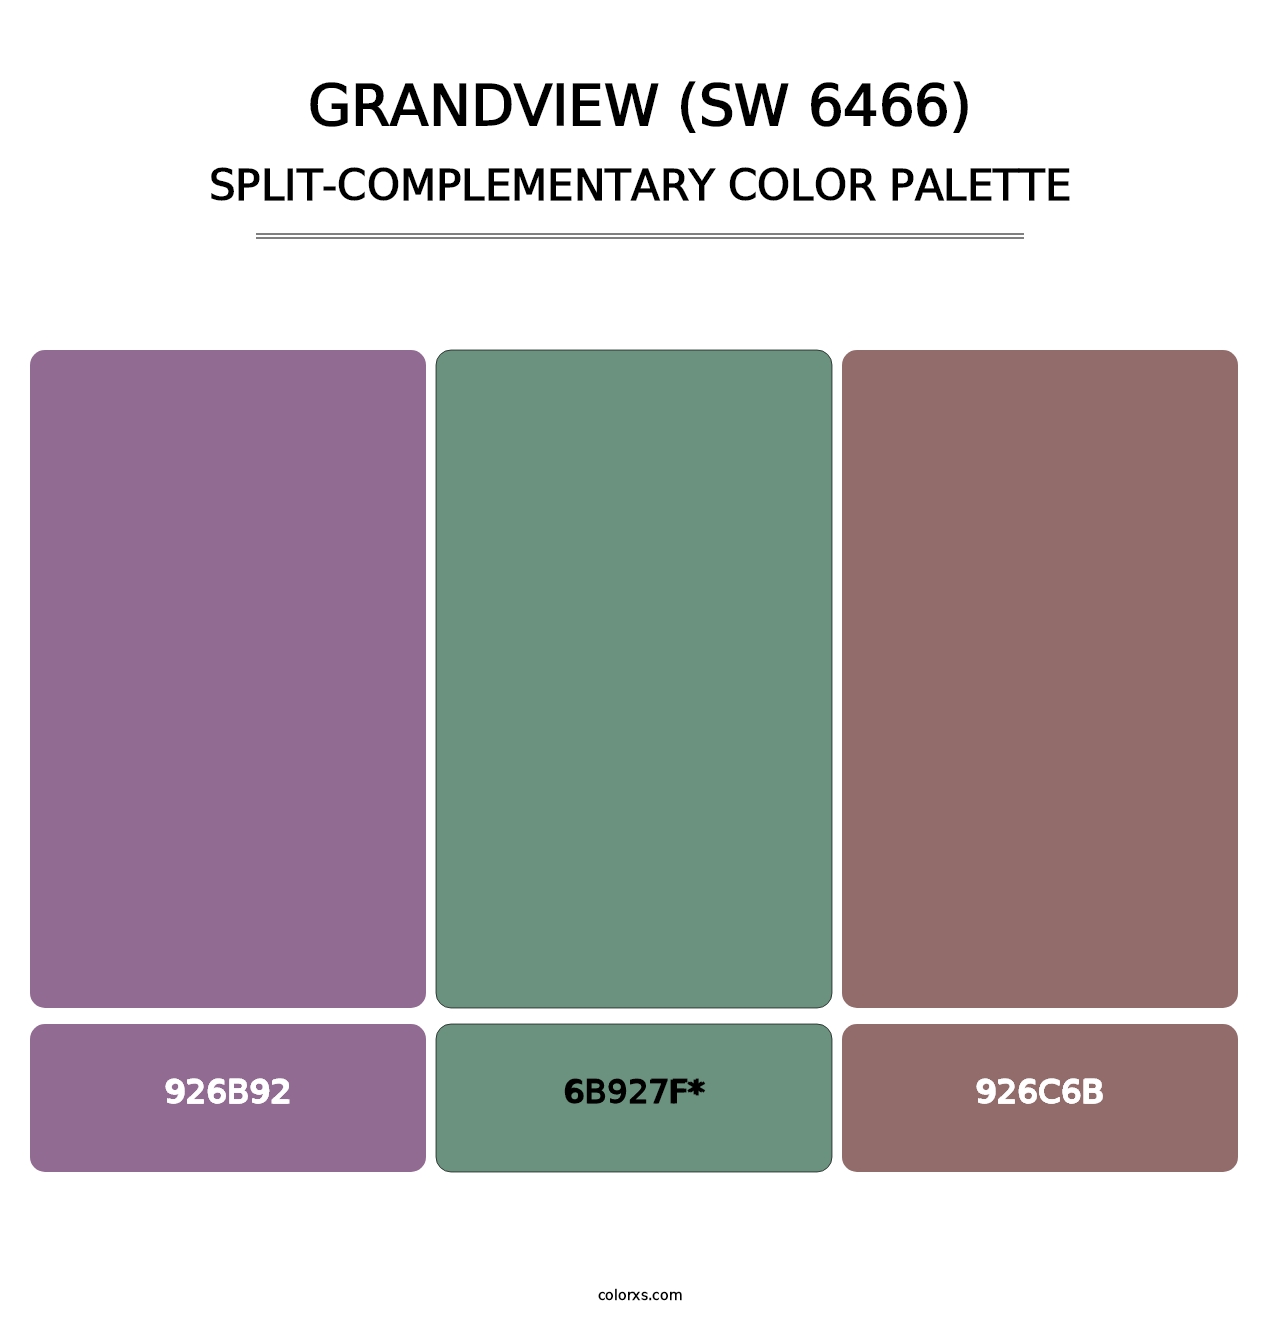 Grandview (SW 6466) - Split-Complementary Color Palette